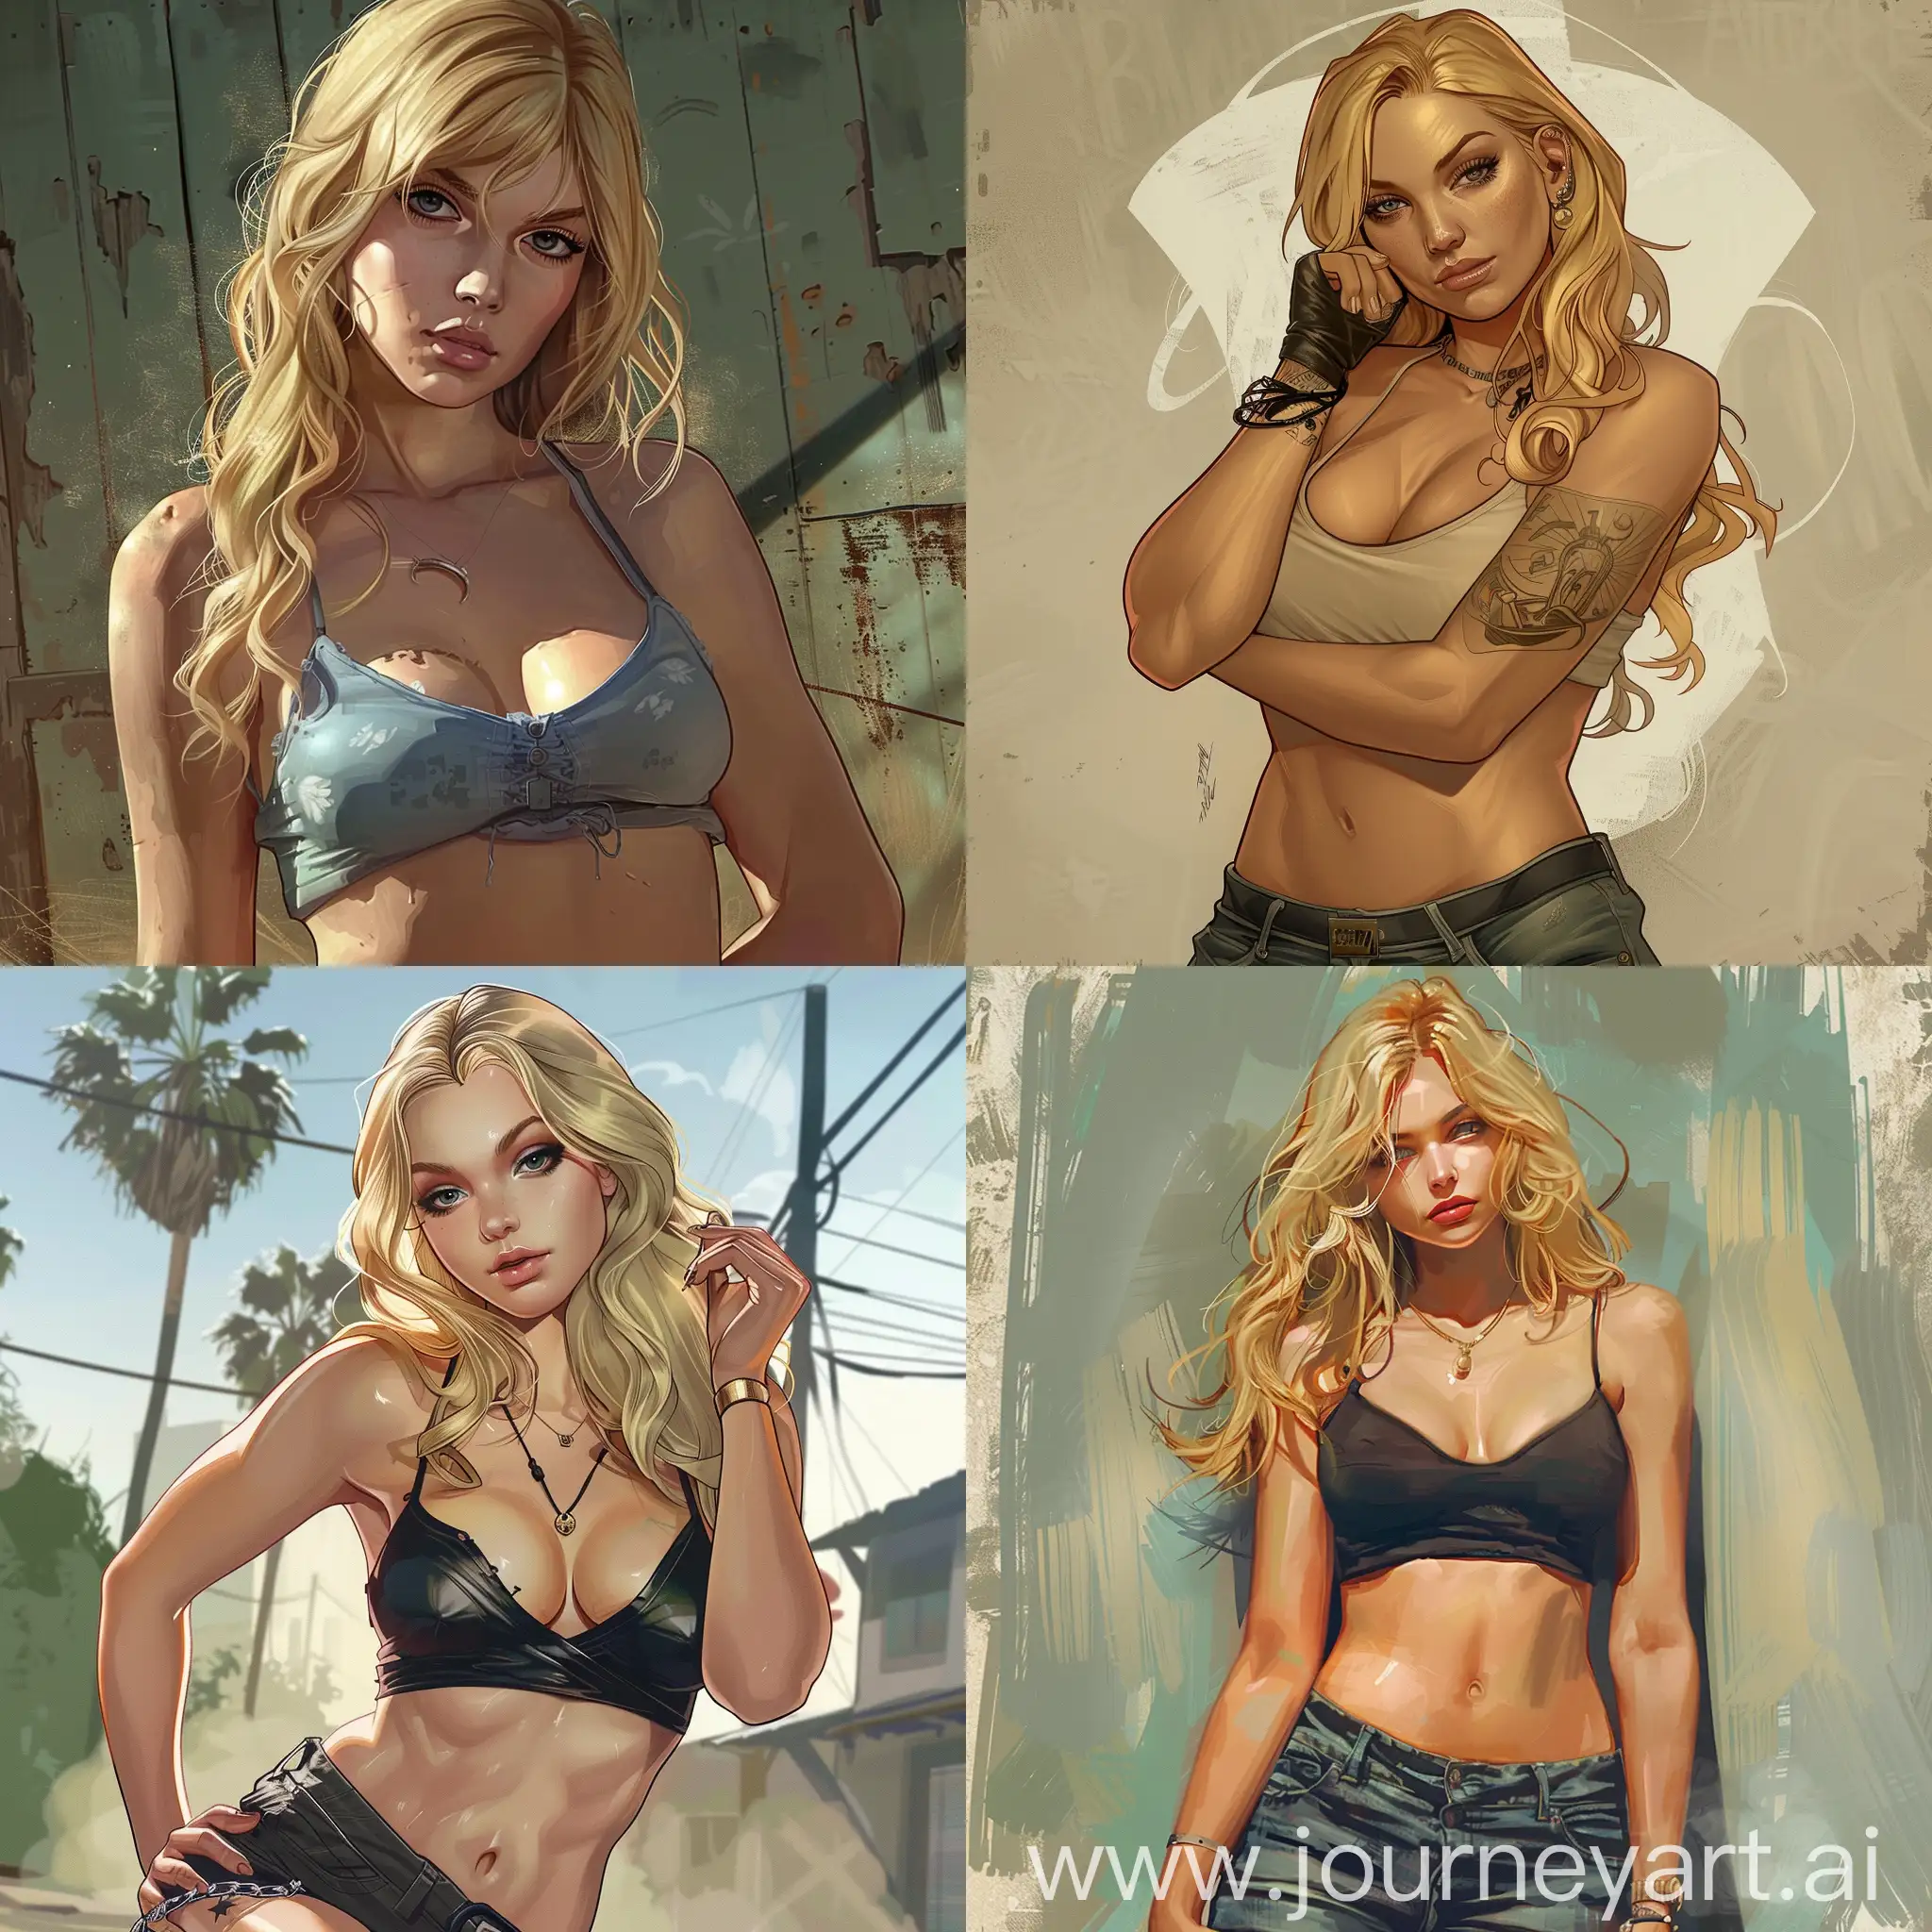 Blonde Female Women Pose, artwork by rockstar games, artwork of gta 5, cel shading, cel art